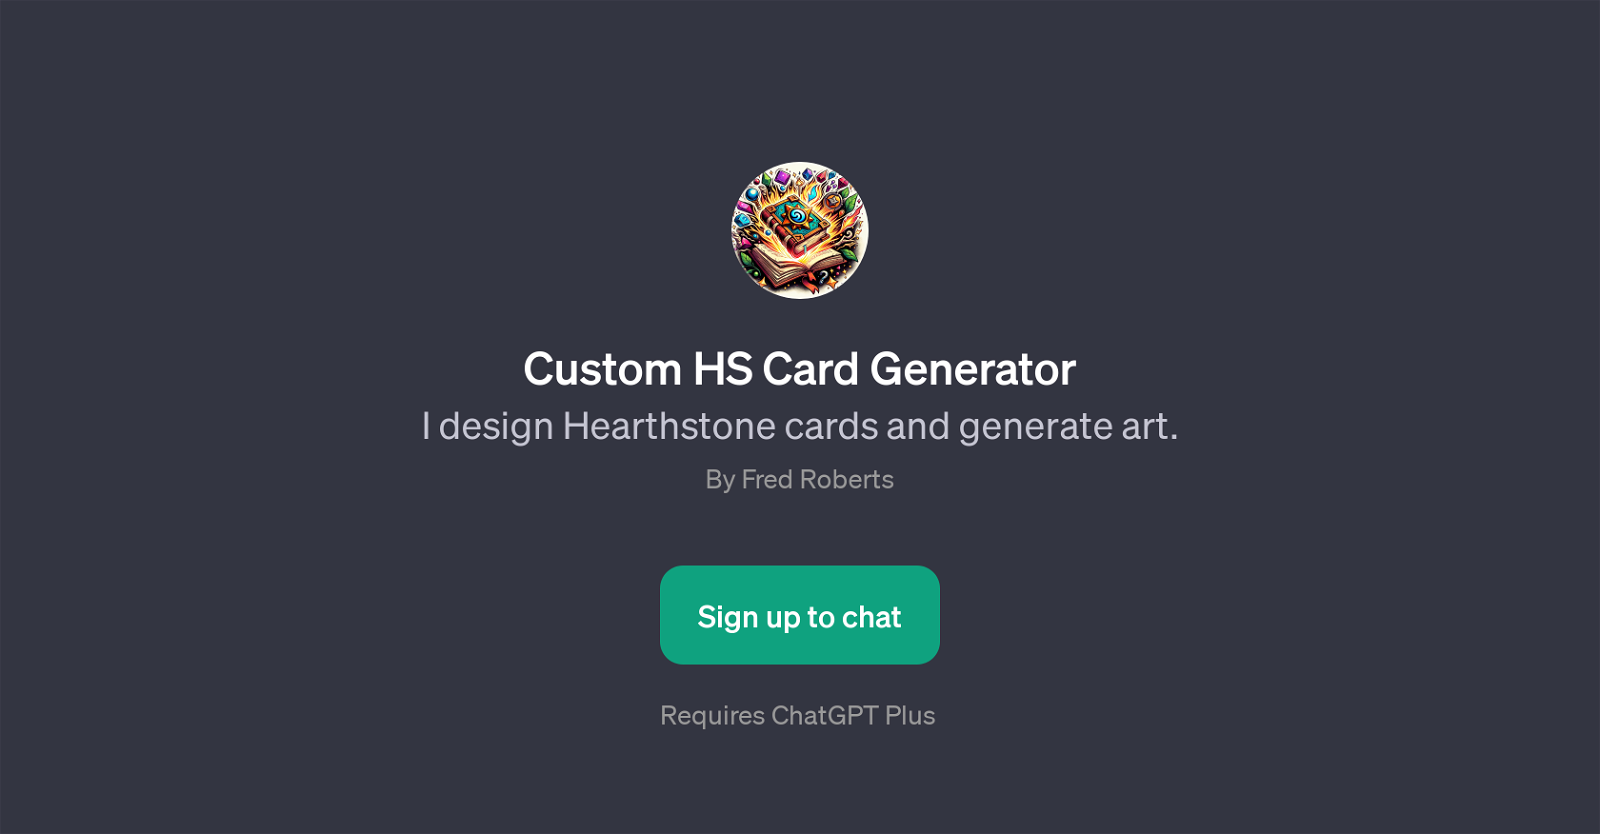 Custom HS Card Generator website